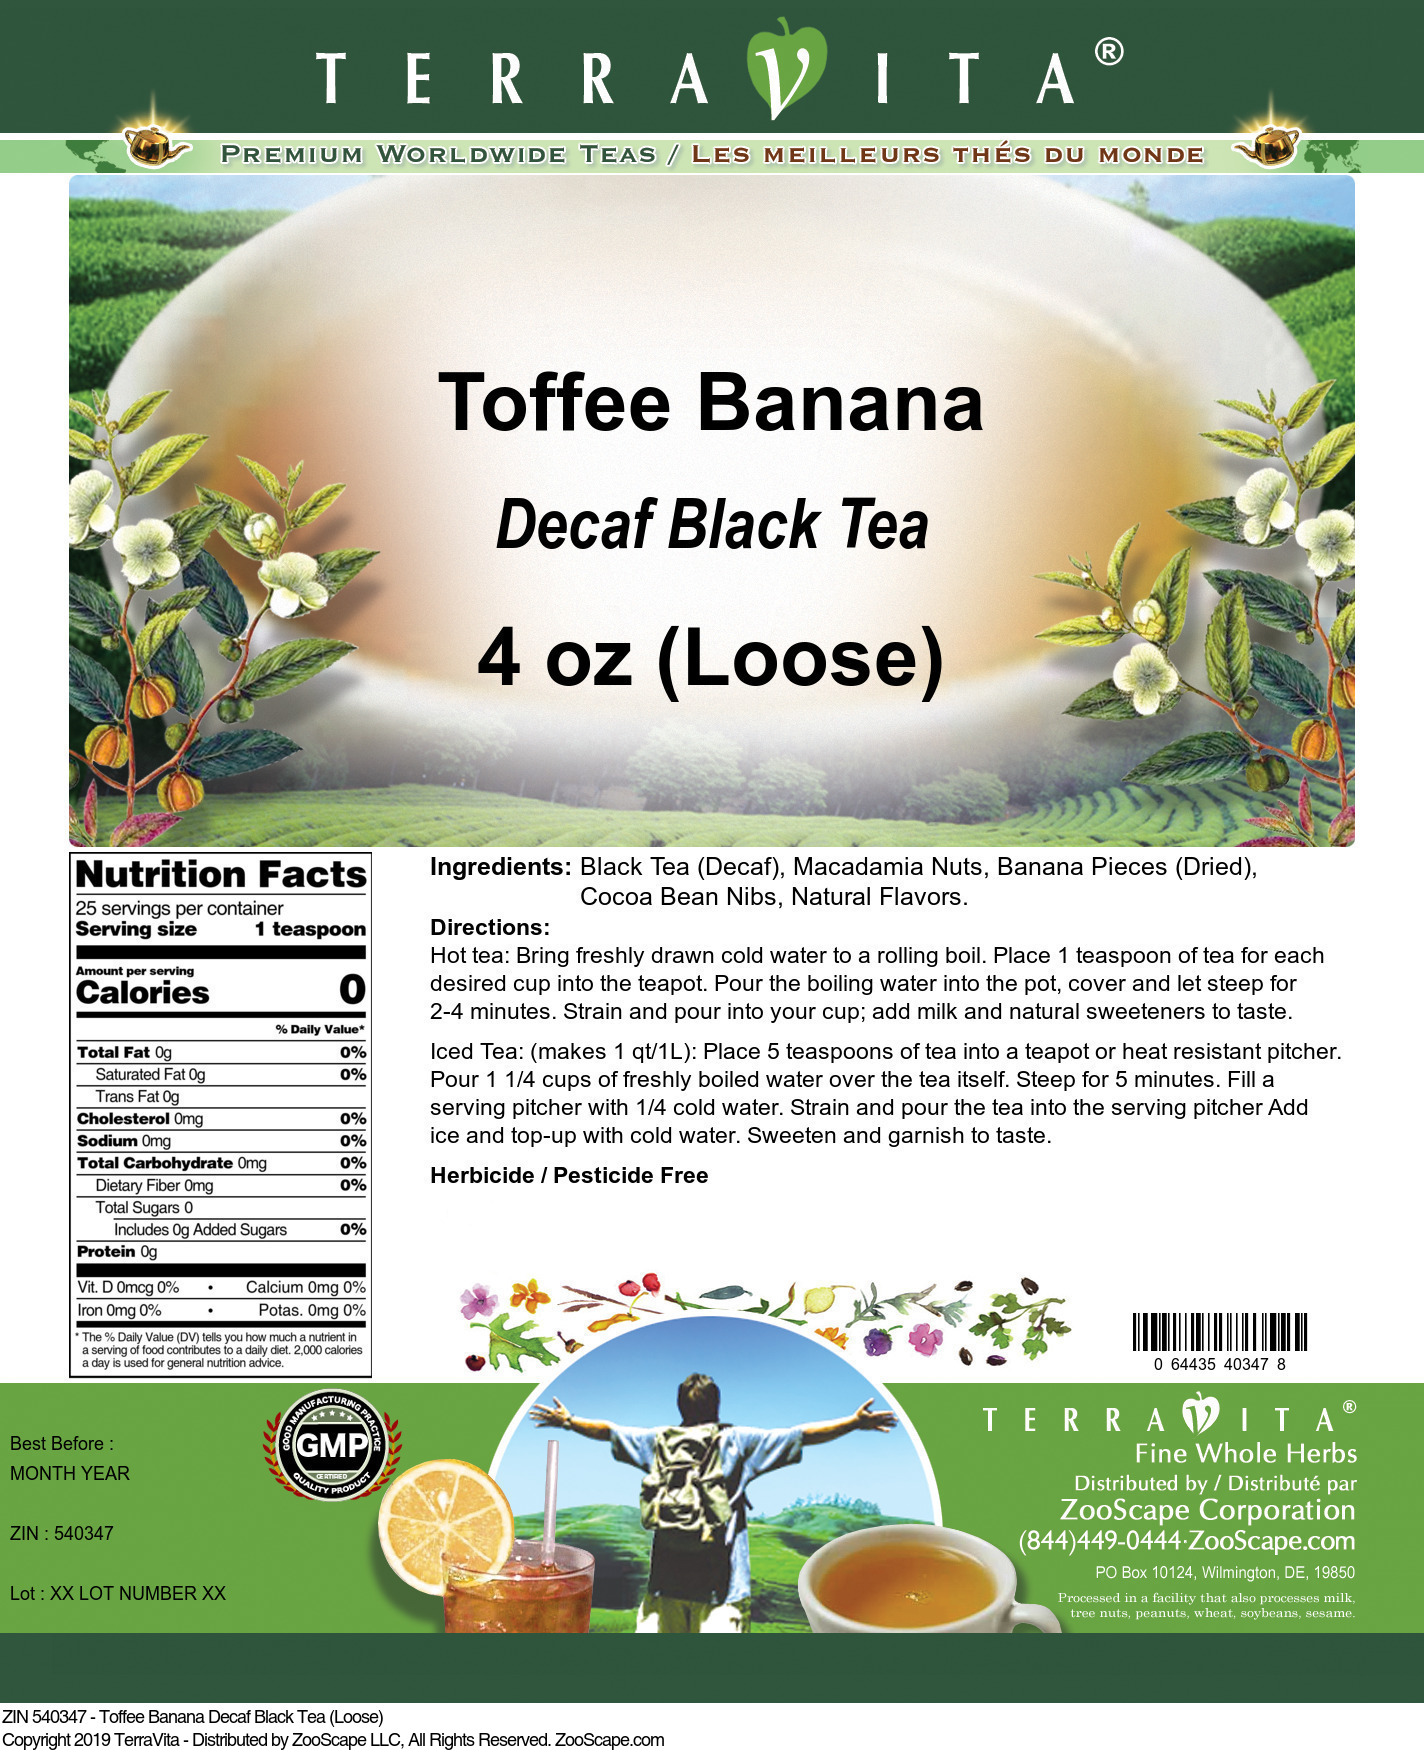 Toffee Banana Decaf Black Tea (Loose) - Label